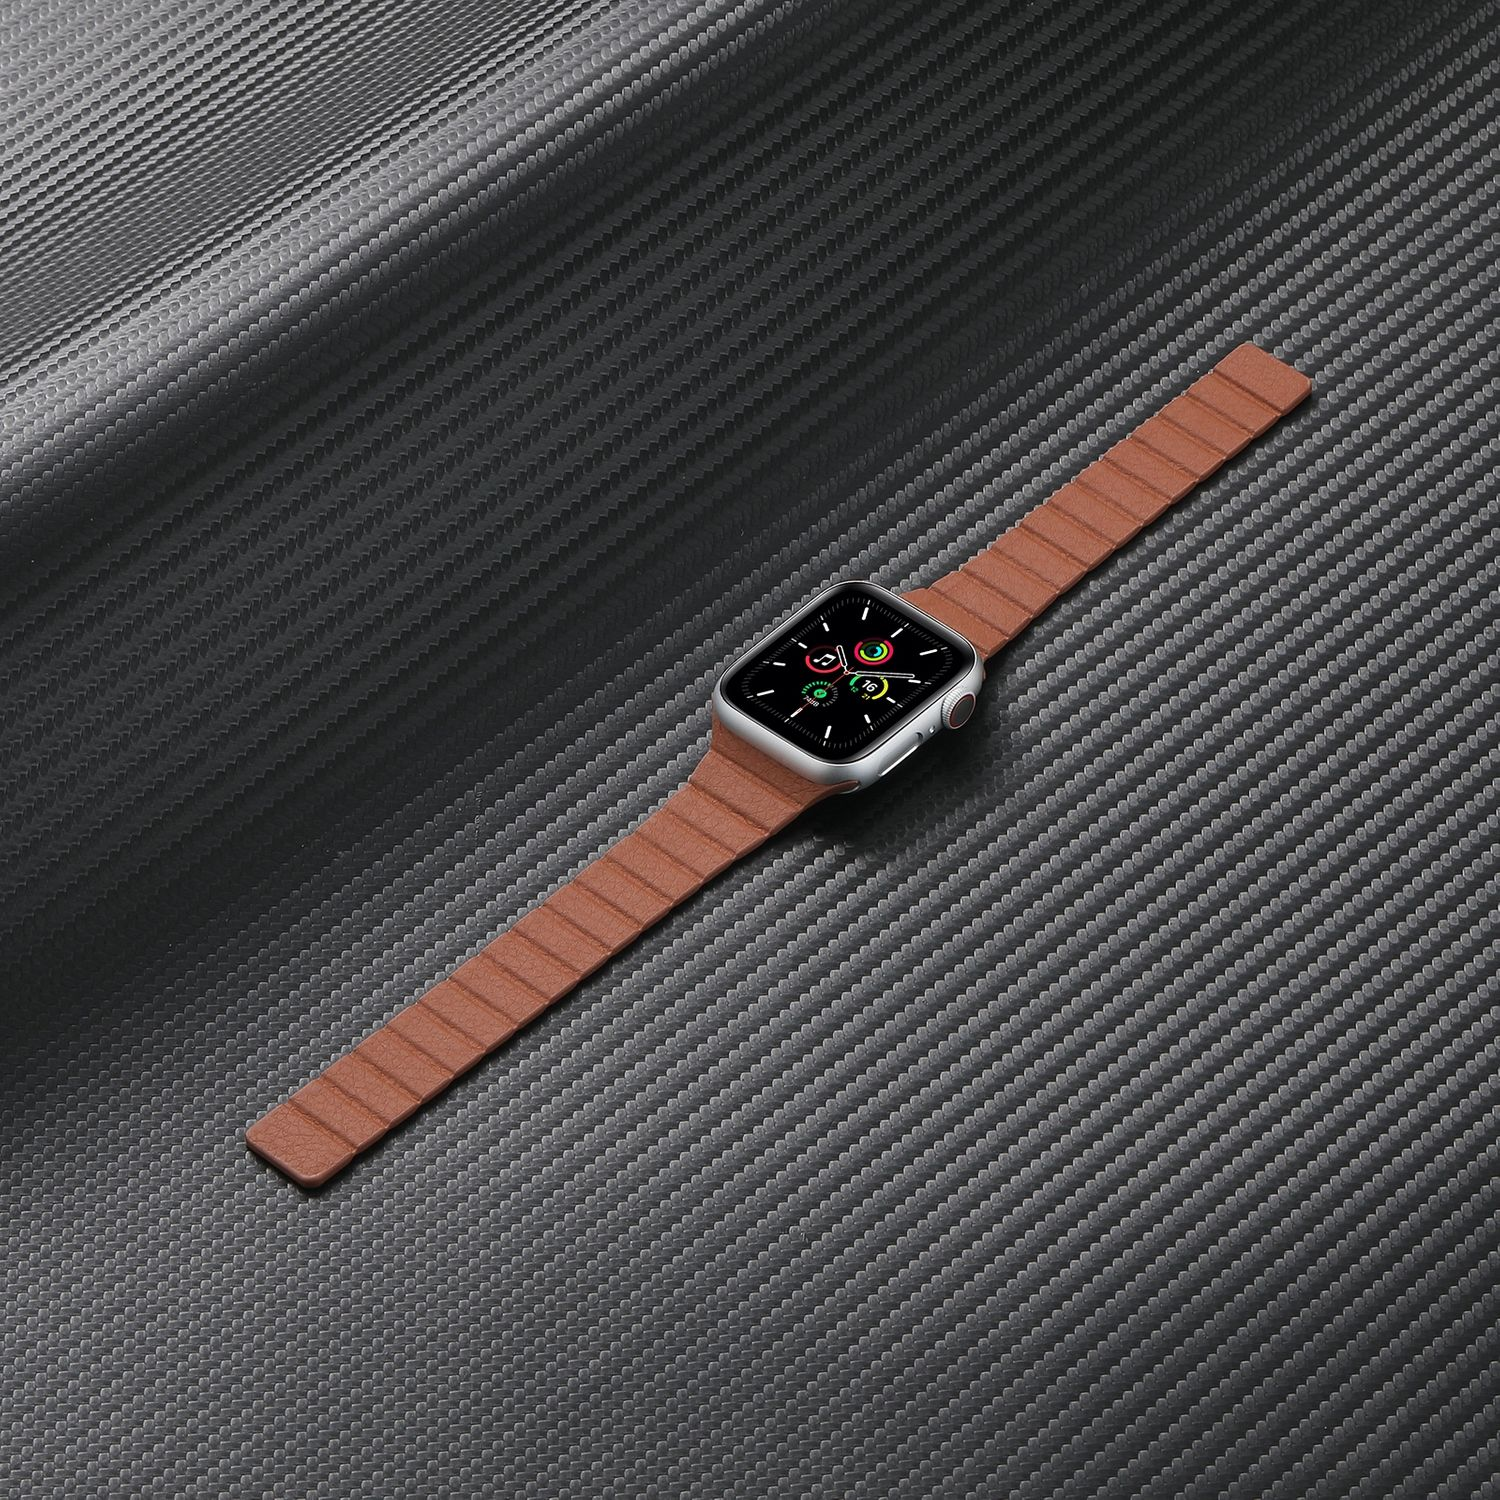 DESIGN Weiß SE Loop, Apple, 6 / Watch Series mm, 1 KÖNIG 2 mm 40 8 5 mm / Ersatzarmband, 3 41 7 38 4 Band